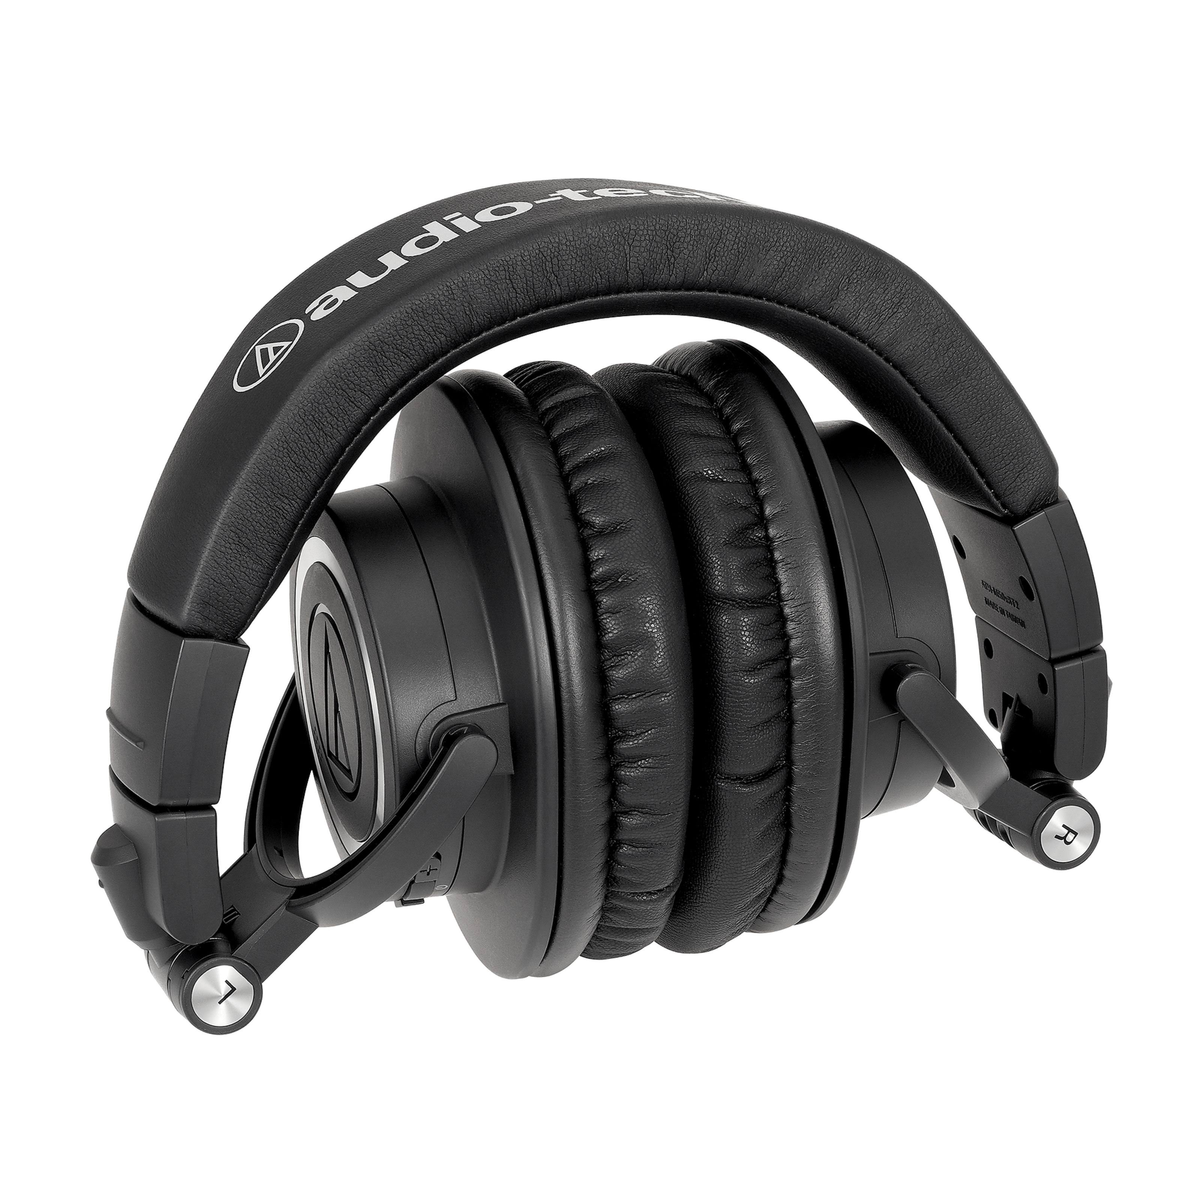 AUDIO-TECHNICA Wireless Bluetooth Headphones Black black, On-ear Bluetooth Headphones